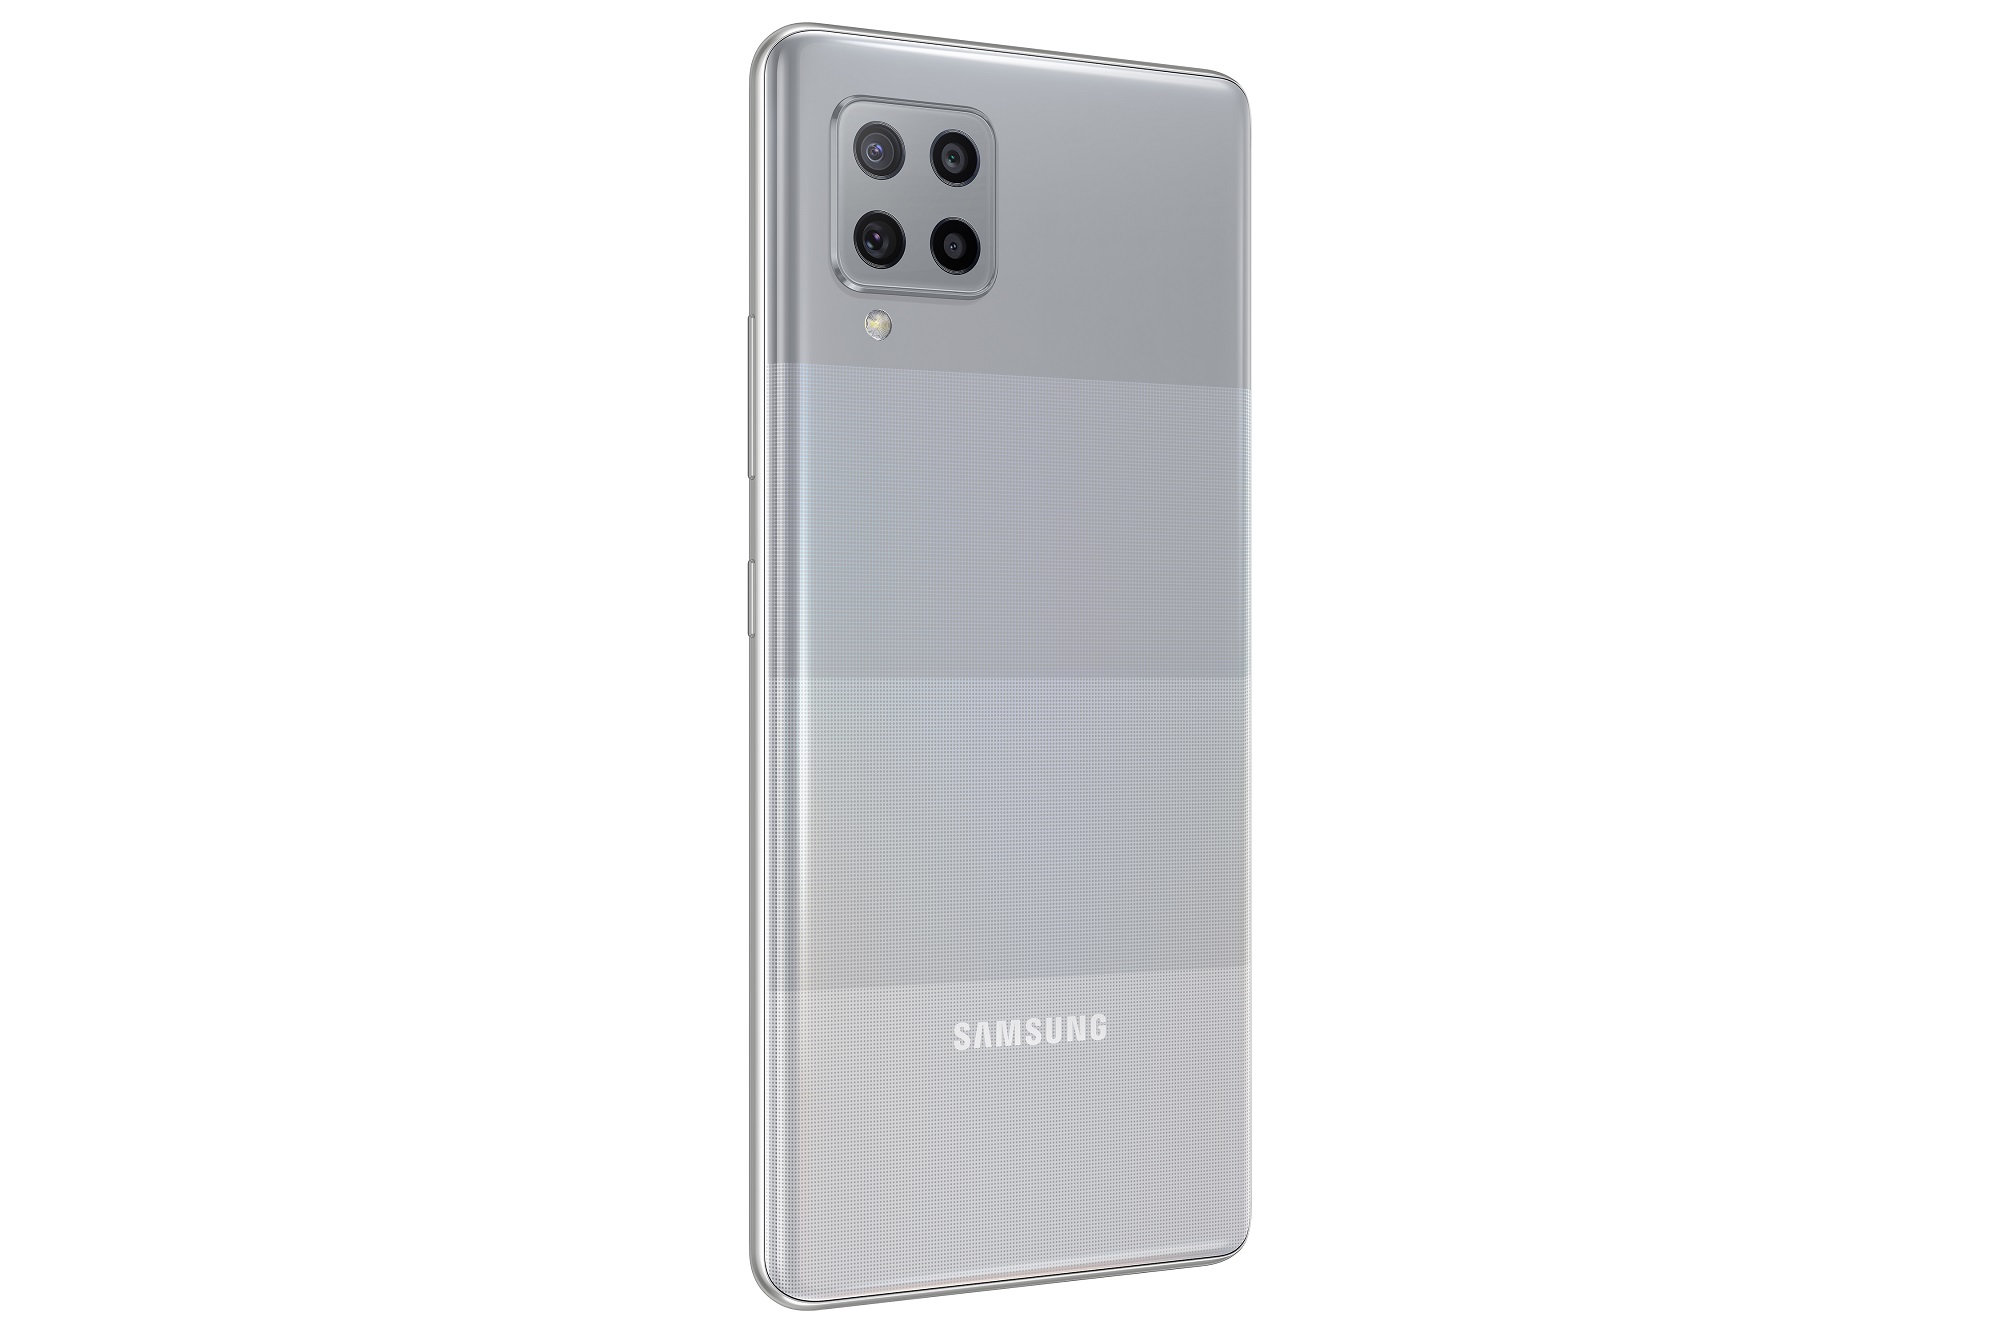 Meet Samsung Malaysia’s Newest Galaxy A42 5G